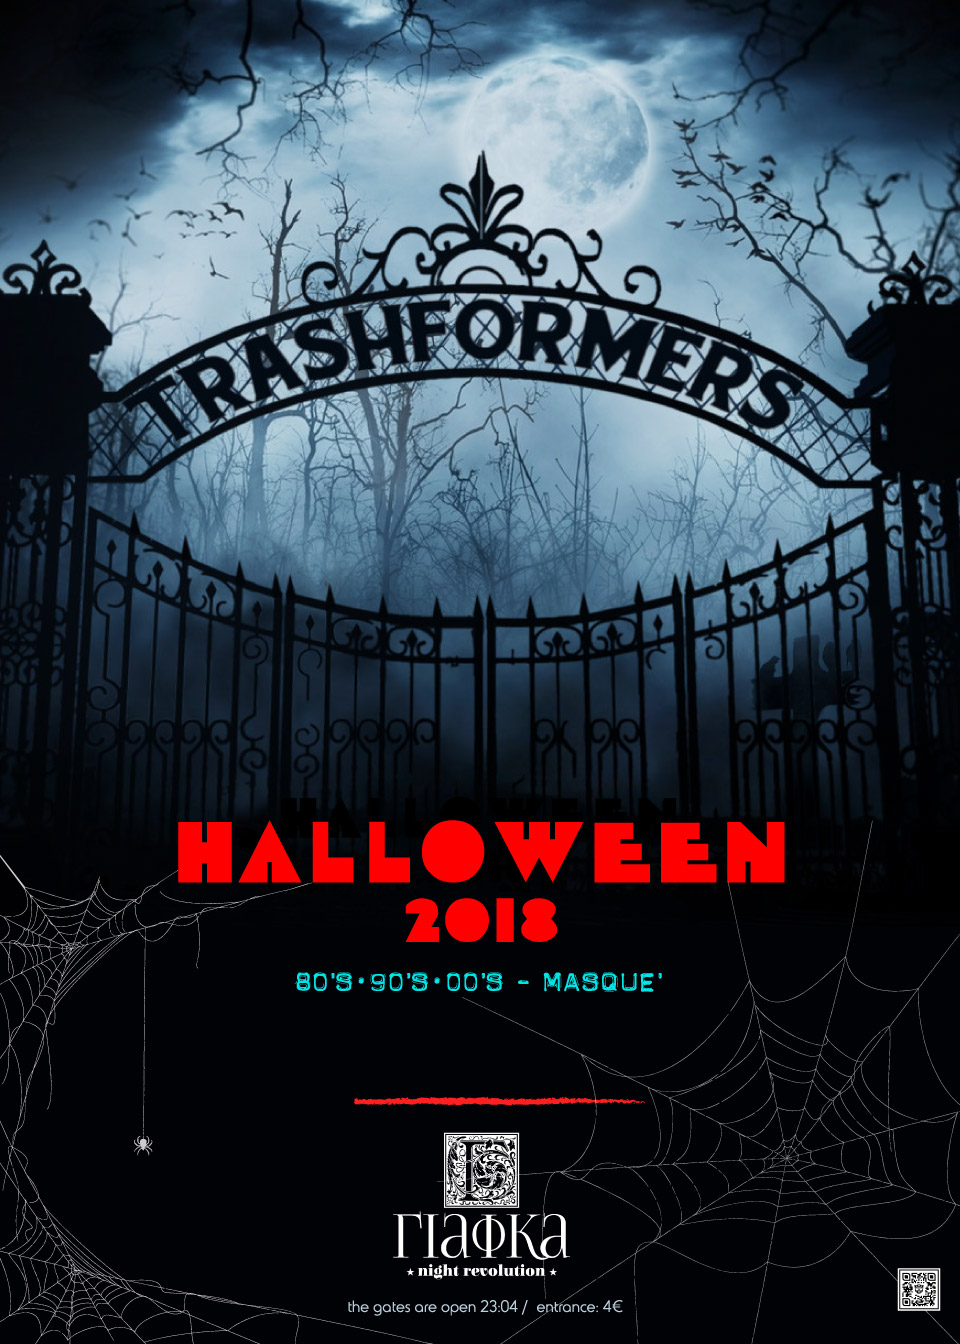 Trashformers Halloween at Γιάφκα, Patras